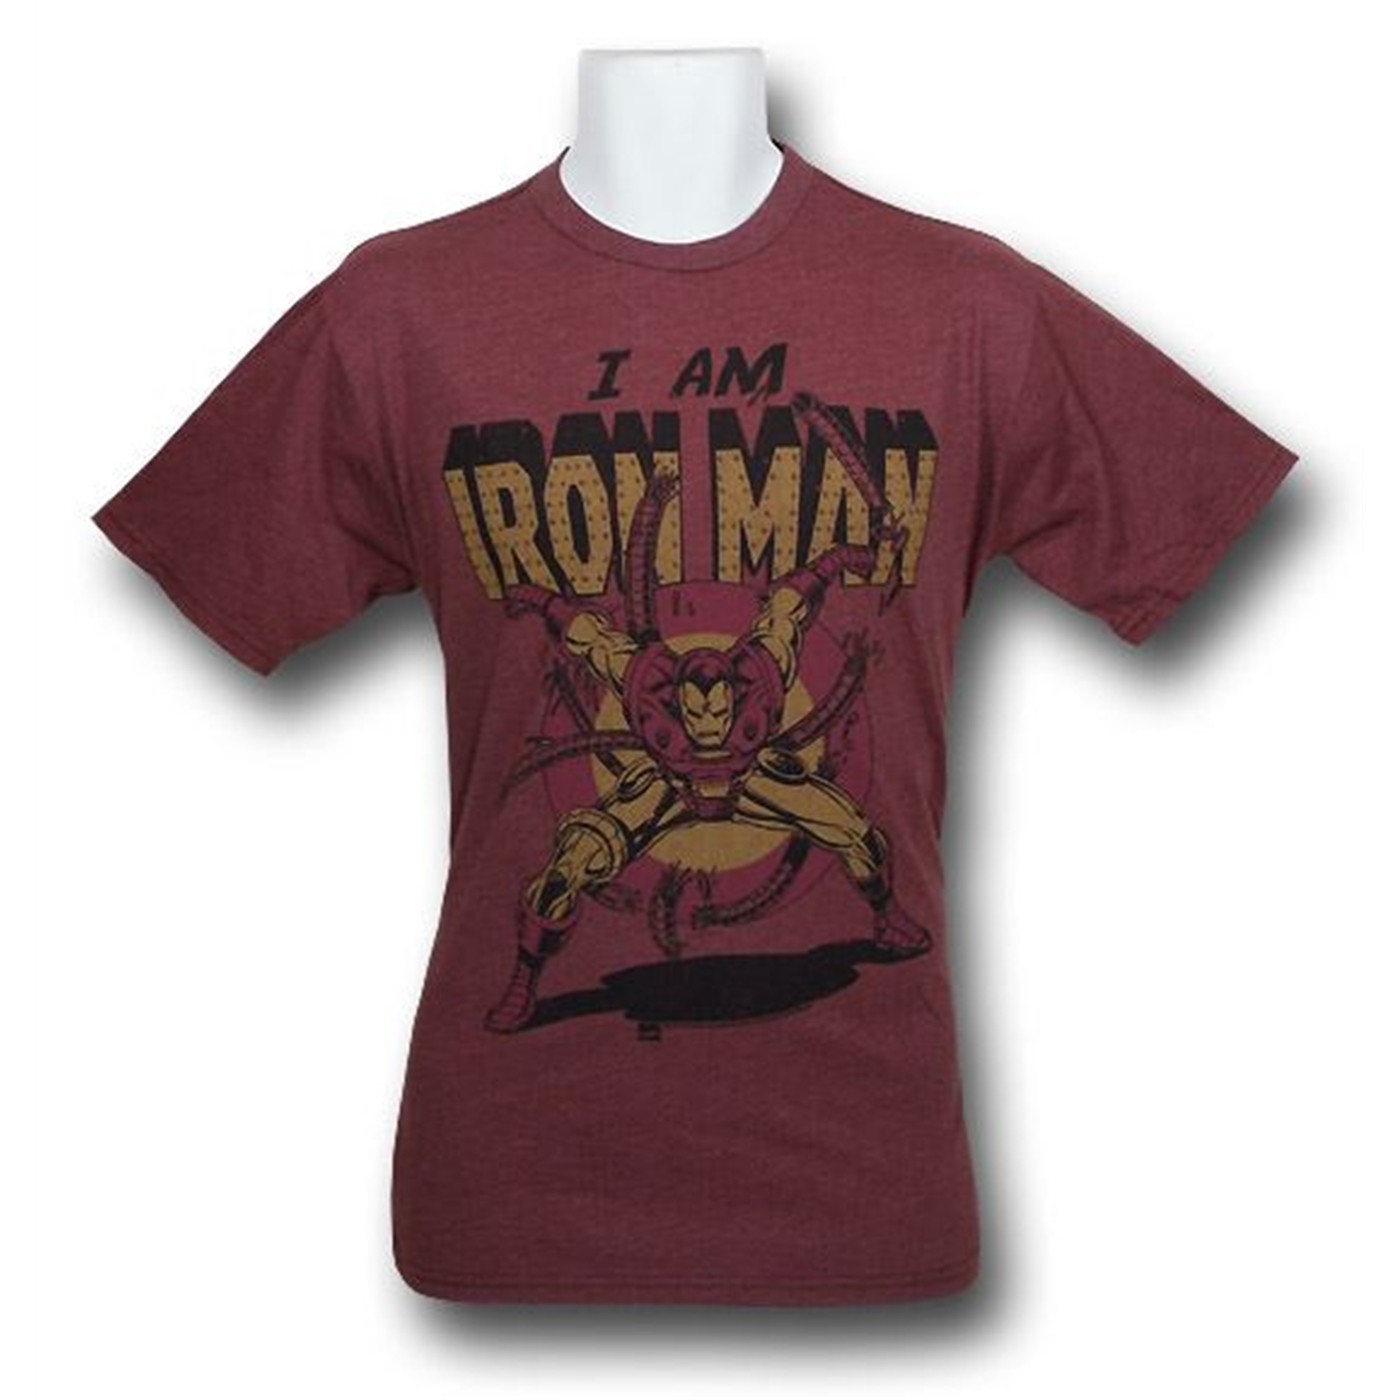 I Am Iron Man Junk Food T-Shirt